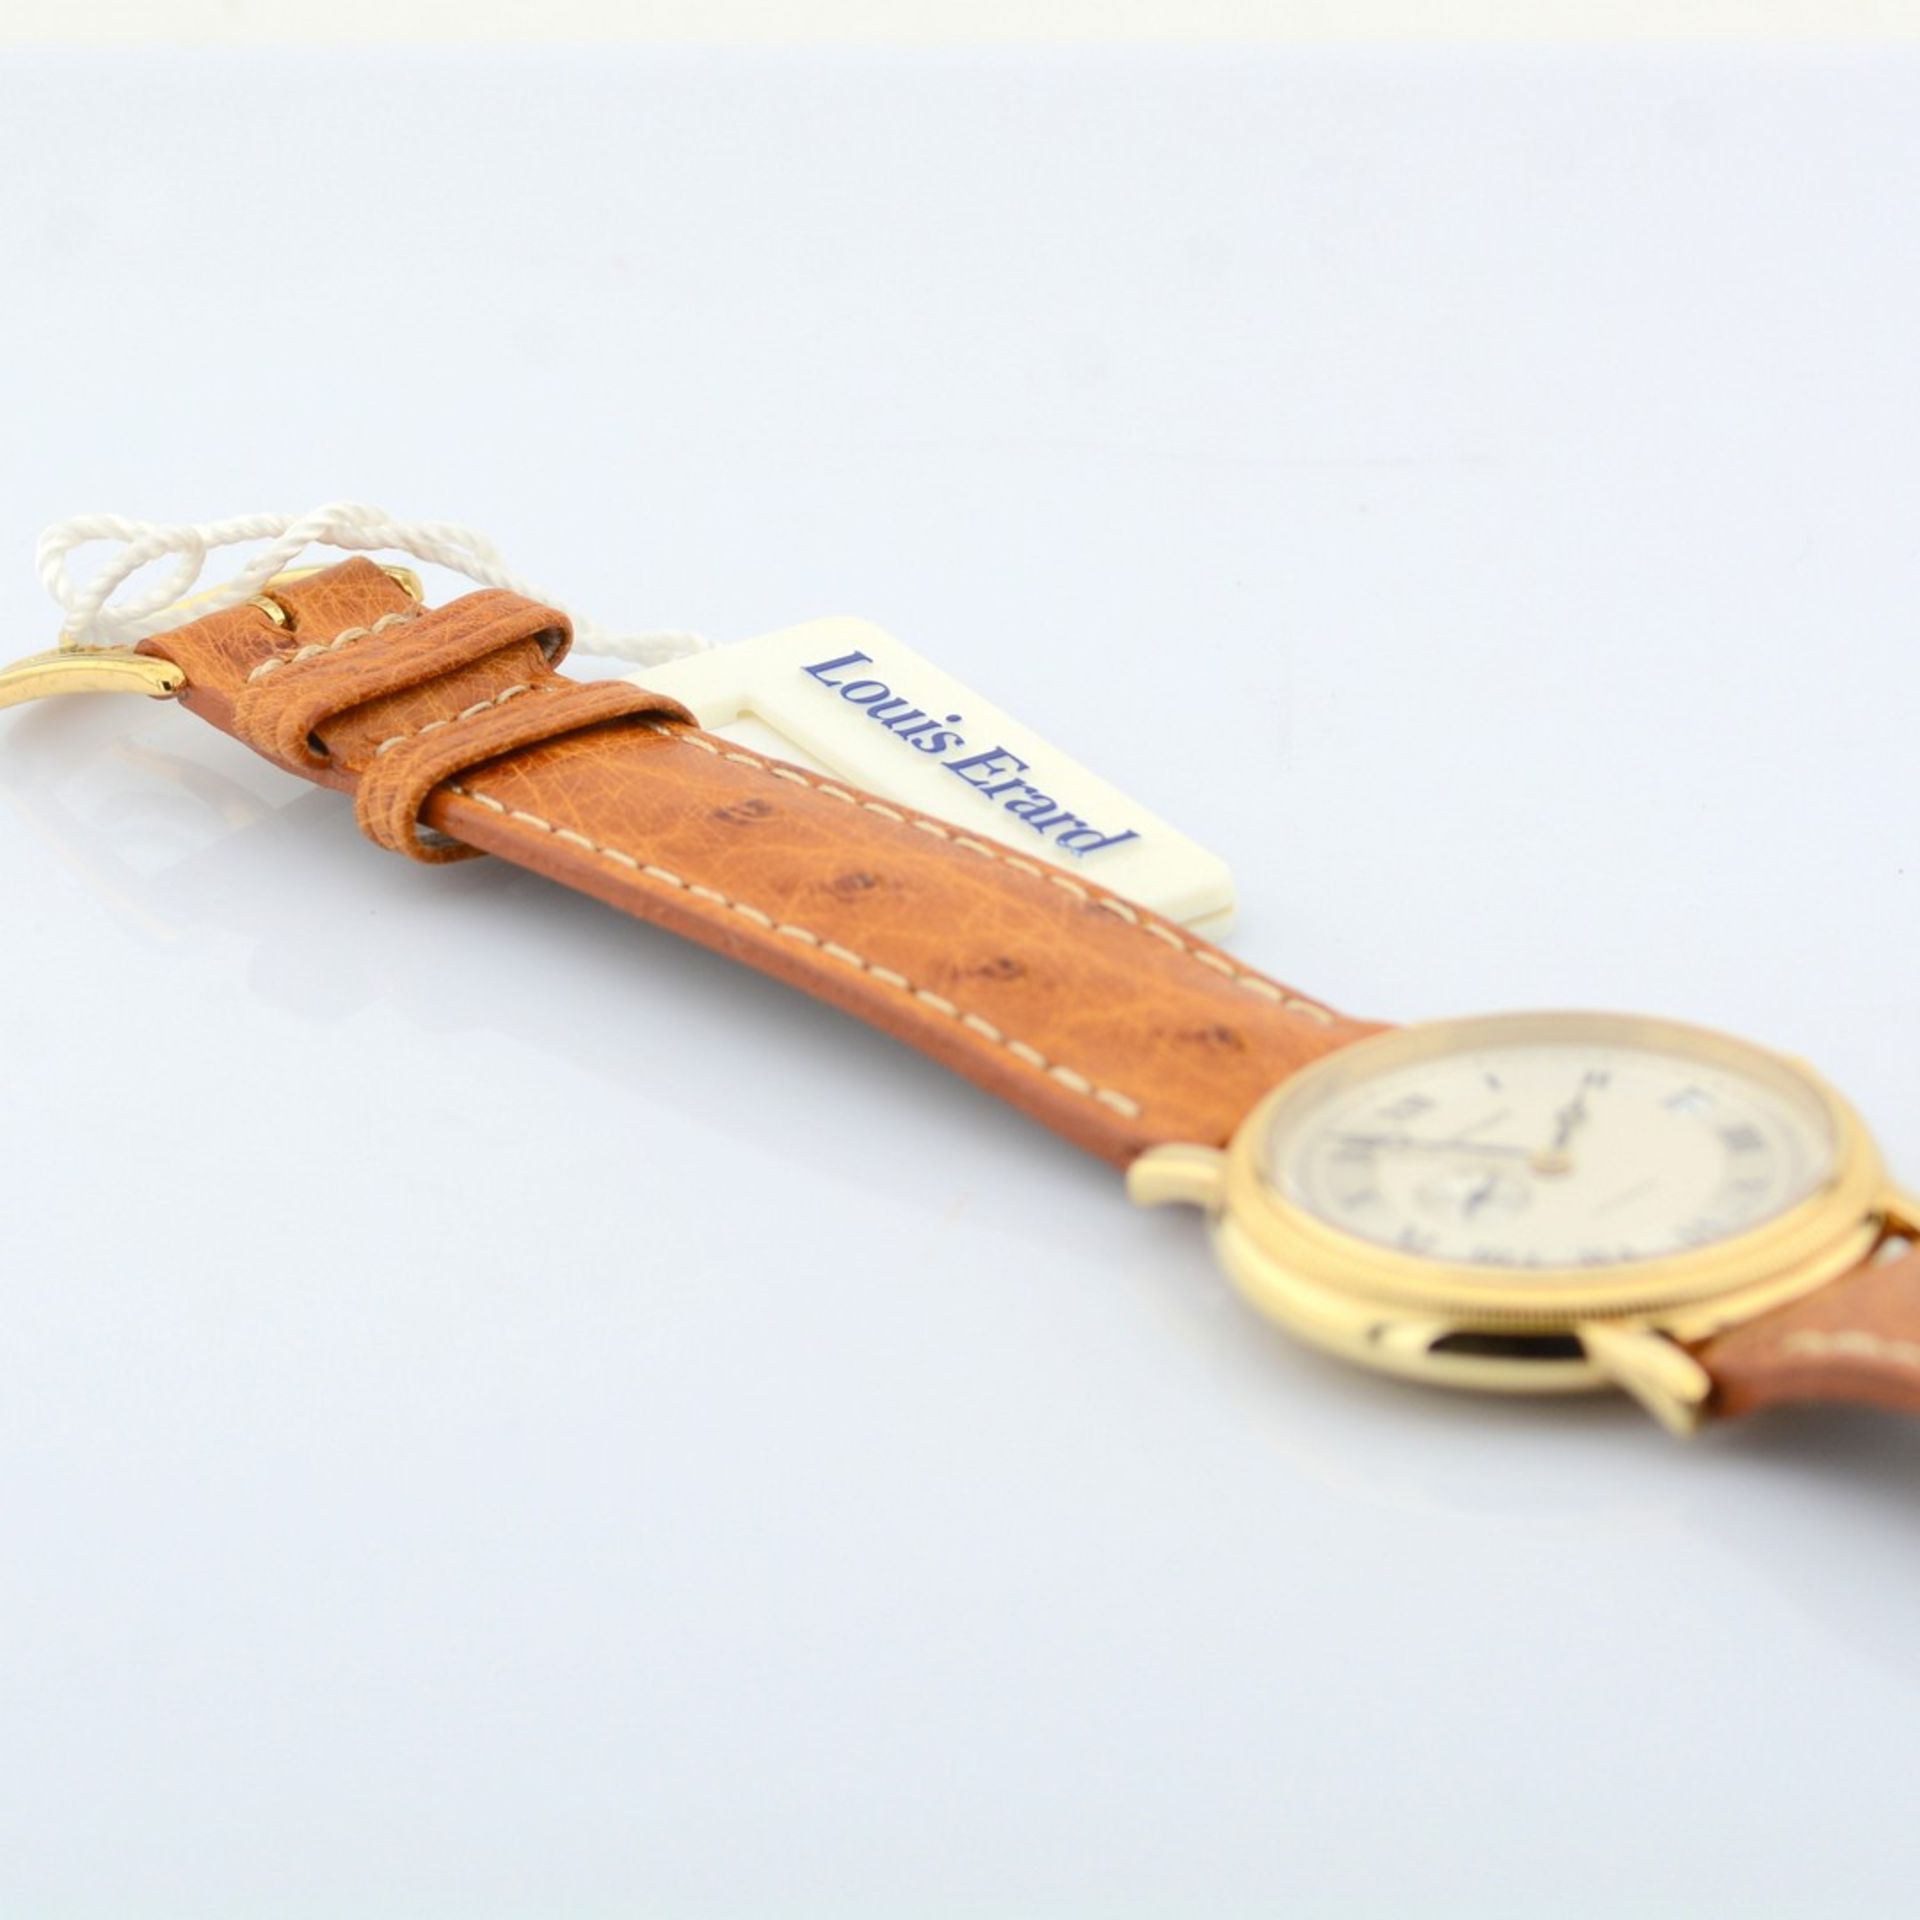 Louis Erard / Automatic Date - Gentlemen's Steel Wristwatch - Image 12 of 12